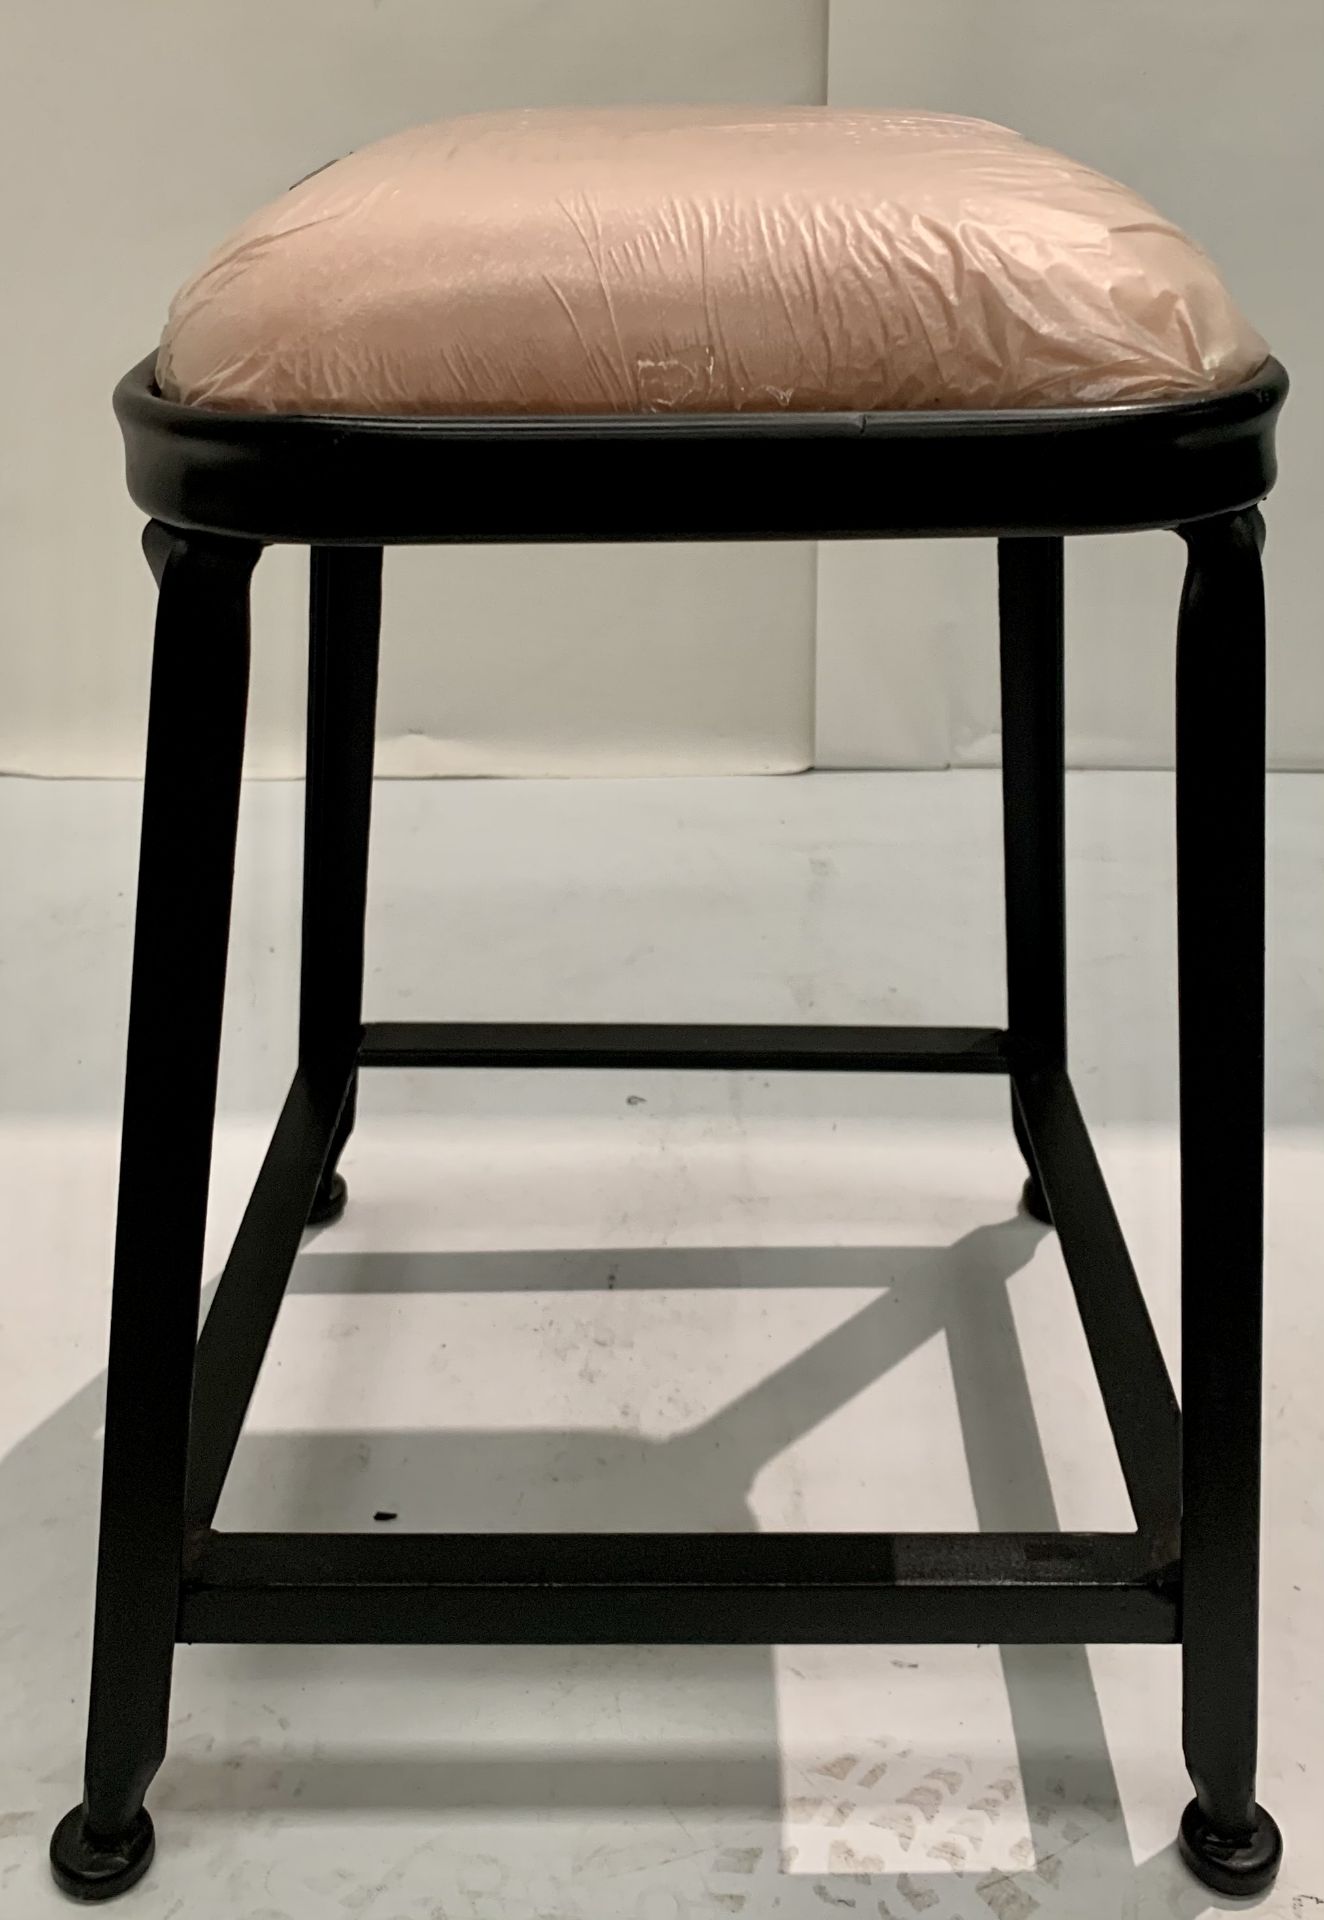 1 x low black metal framed bar stool 54cm high - (1 outer box)